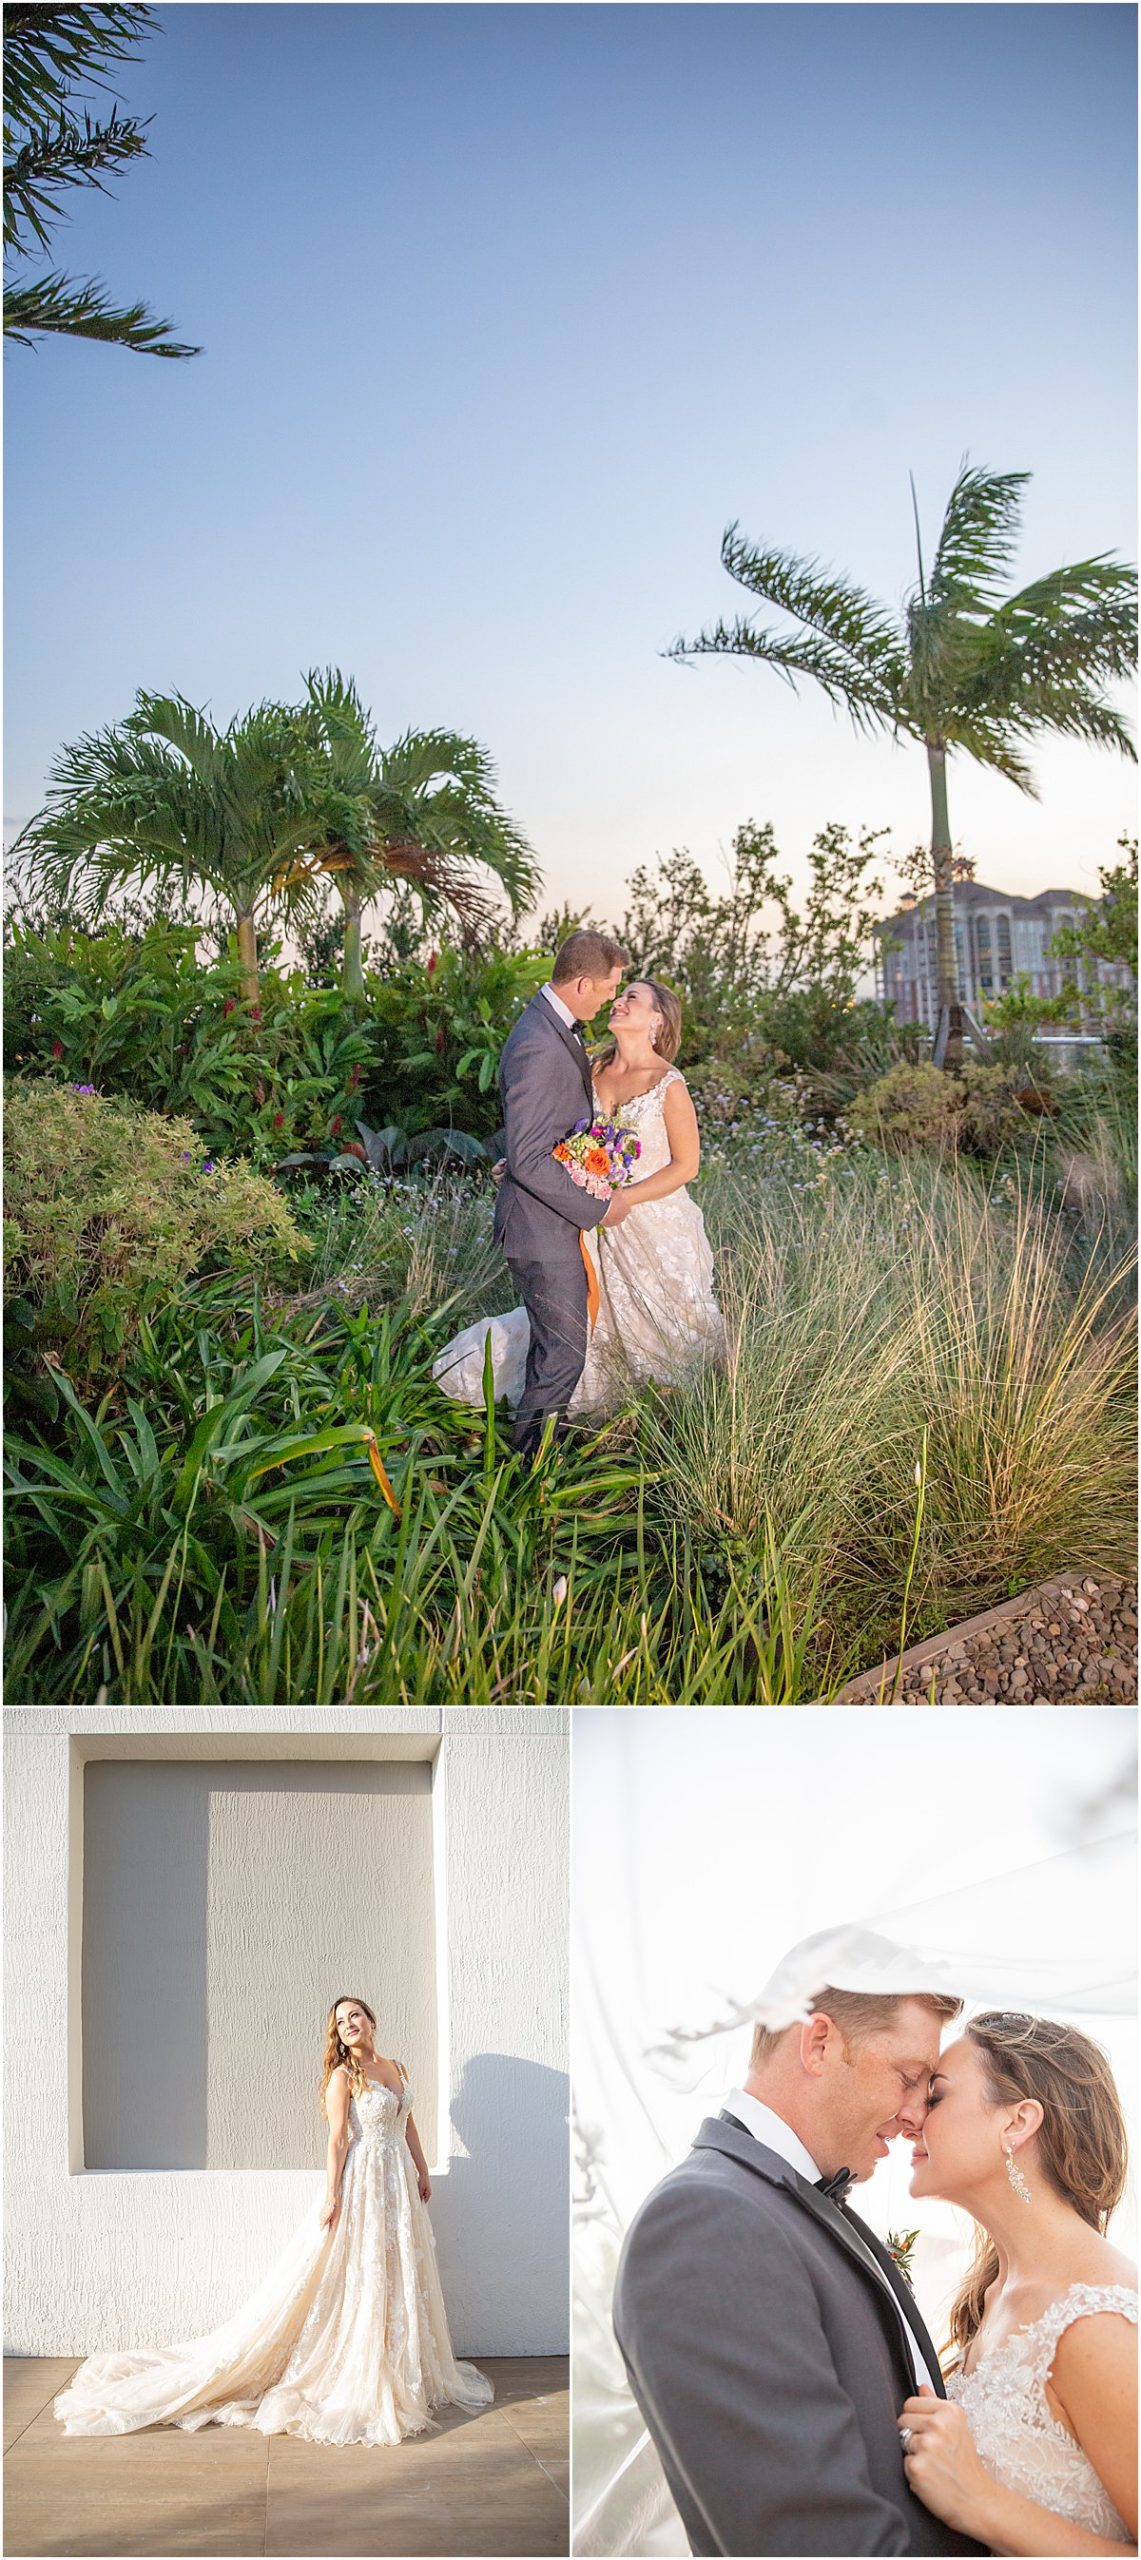 Elegant Garden Wedding | Canopy by Hilton West Palm Beach Downtown | Palm Beach Florida | Married in Palm Beach | www.marriedinpalmbeach.com | Krystal Zaskey Photography